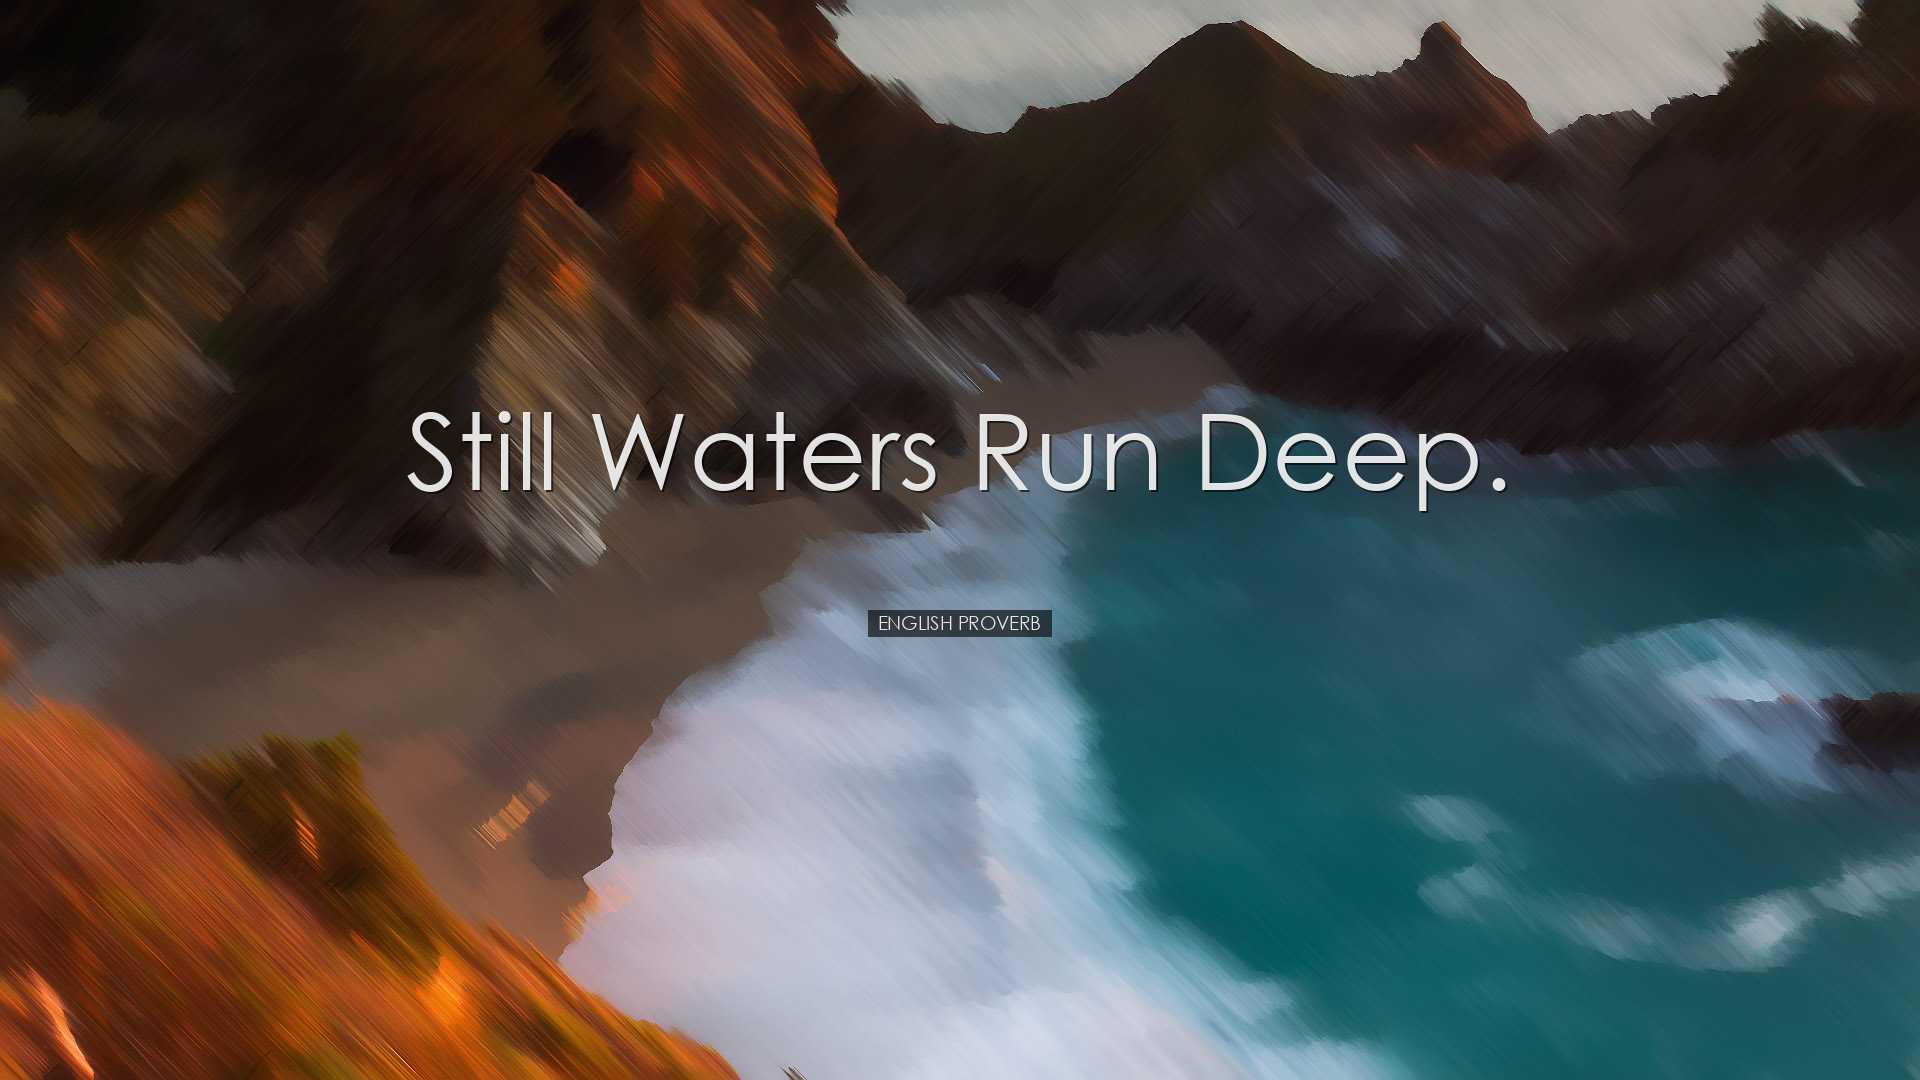 Still waters run deep. - English Proverb